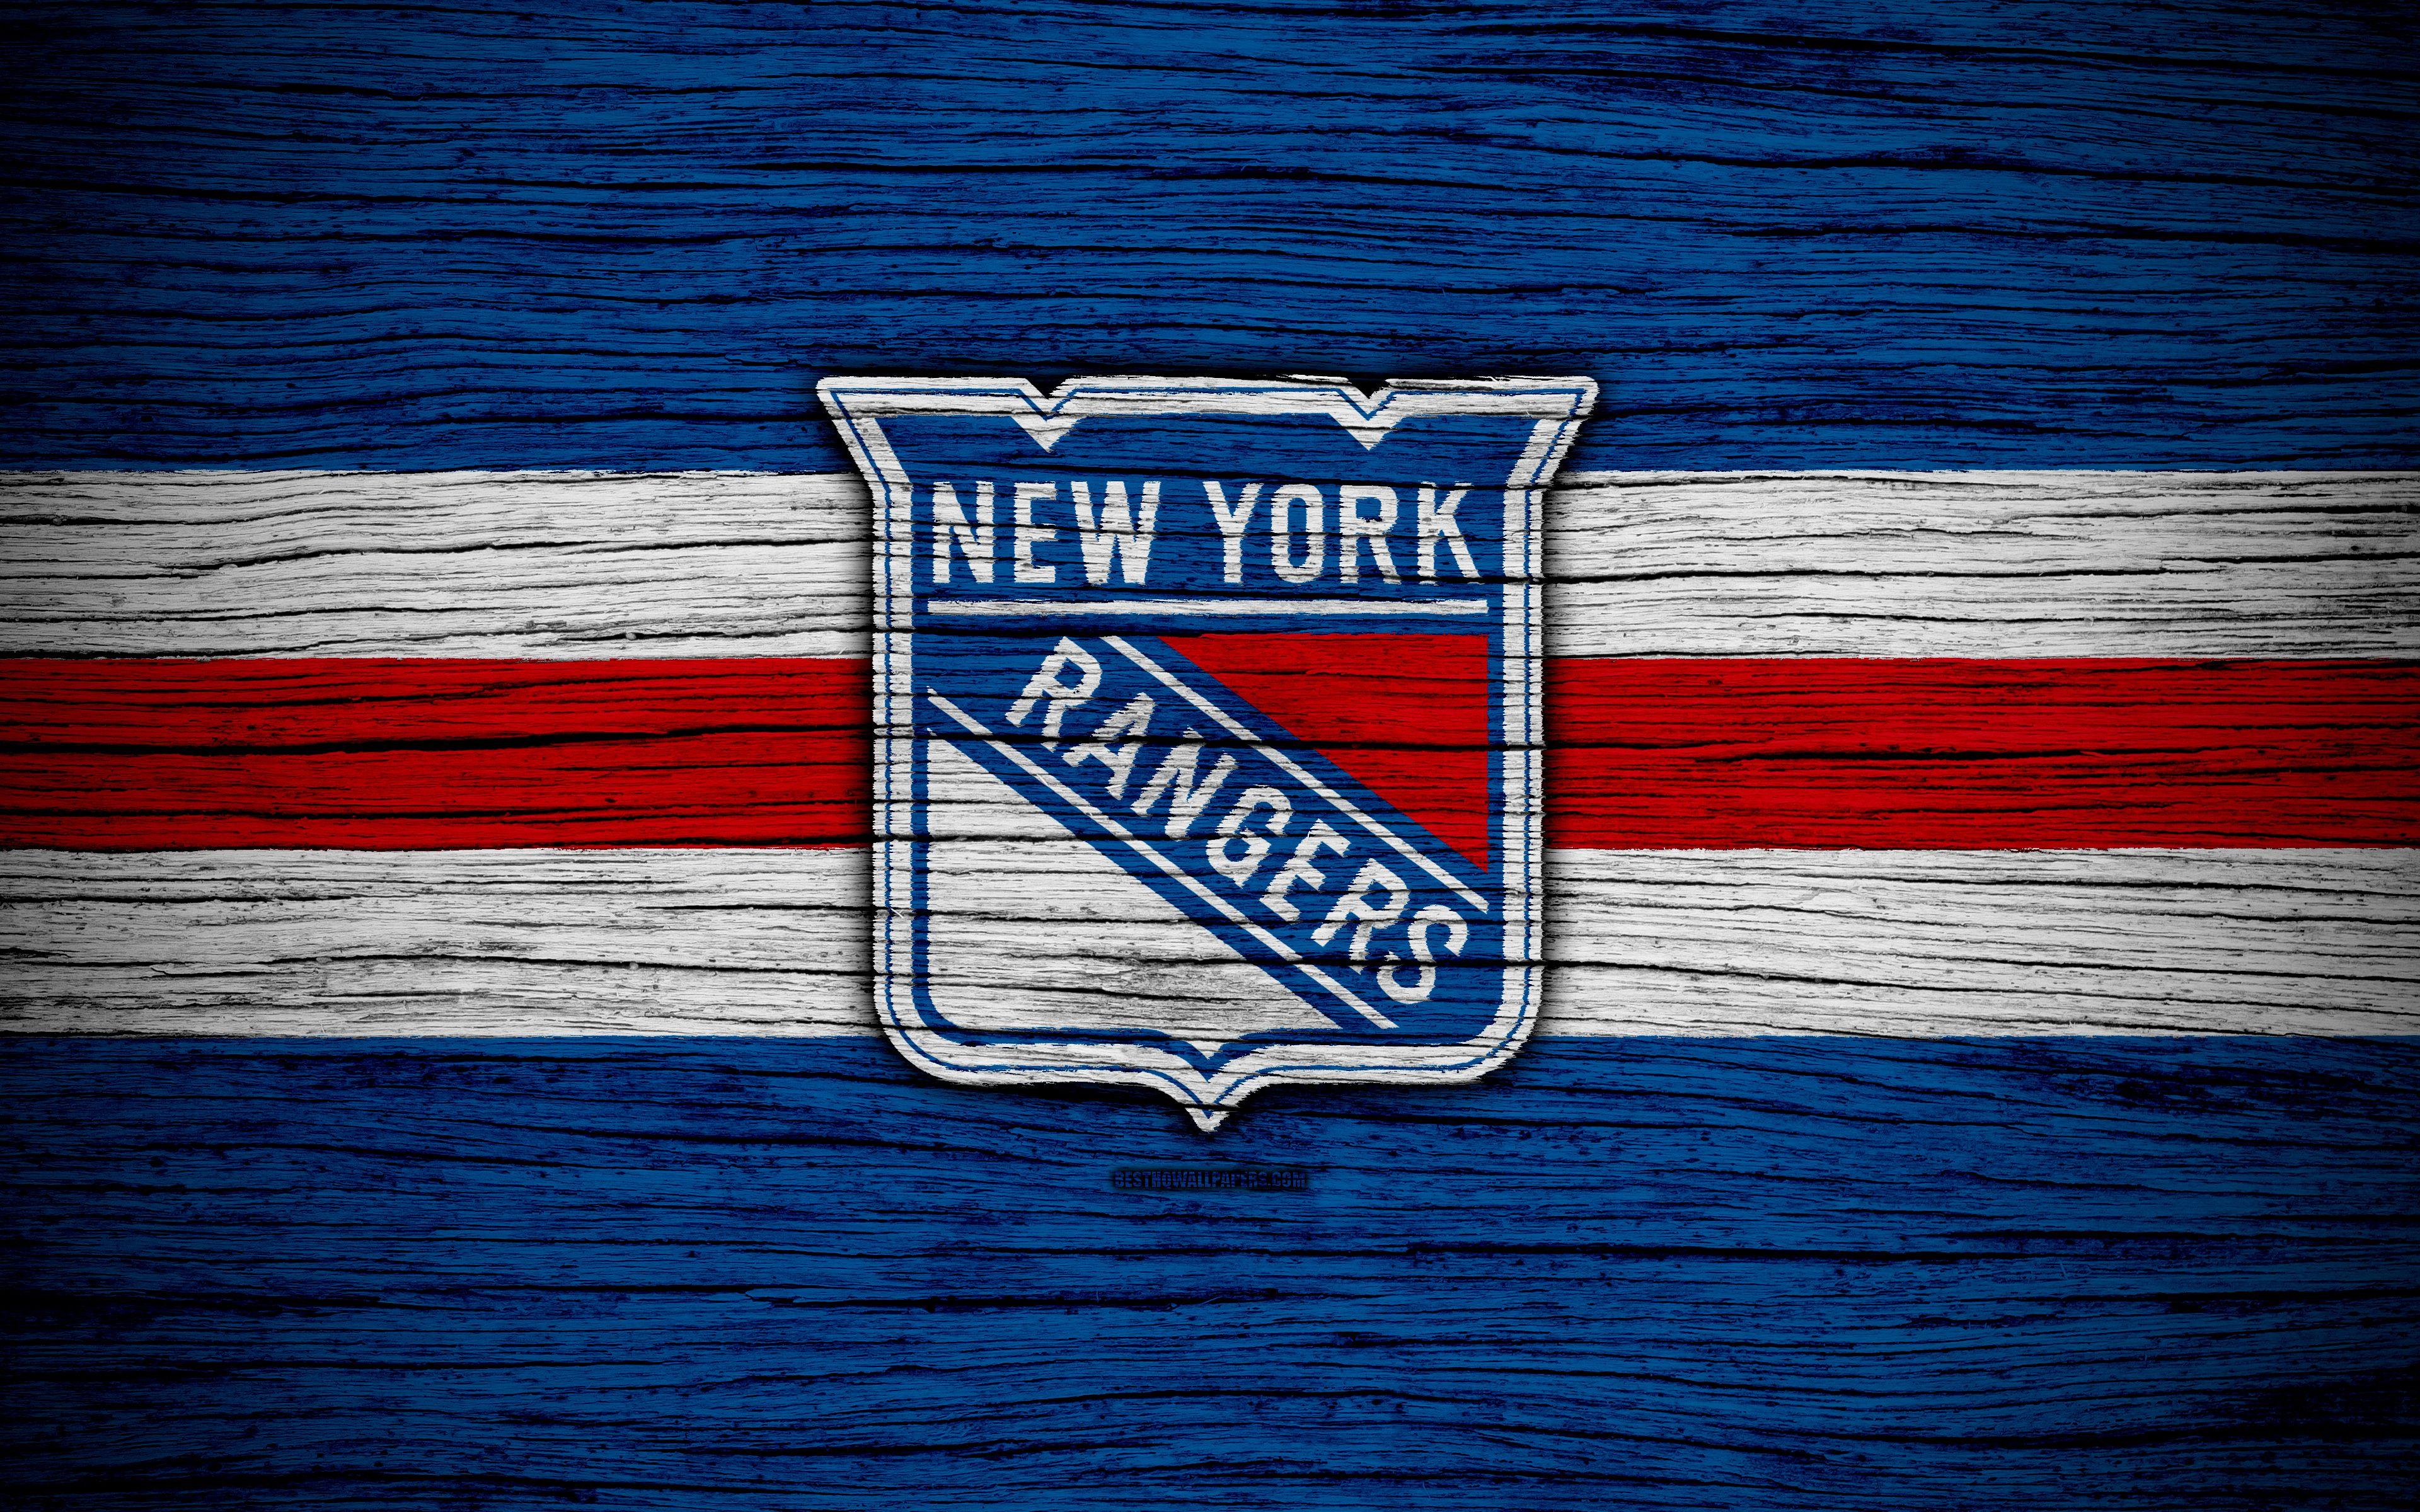 New York Rangers Wallpapers - Top Free